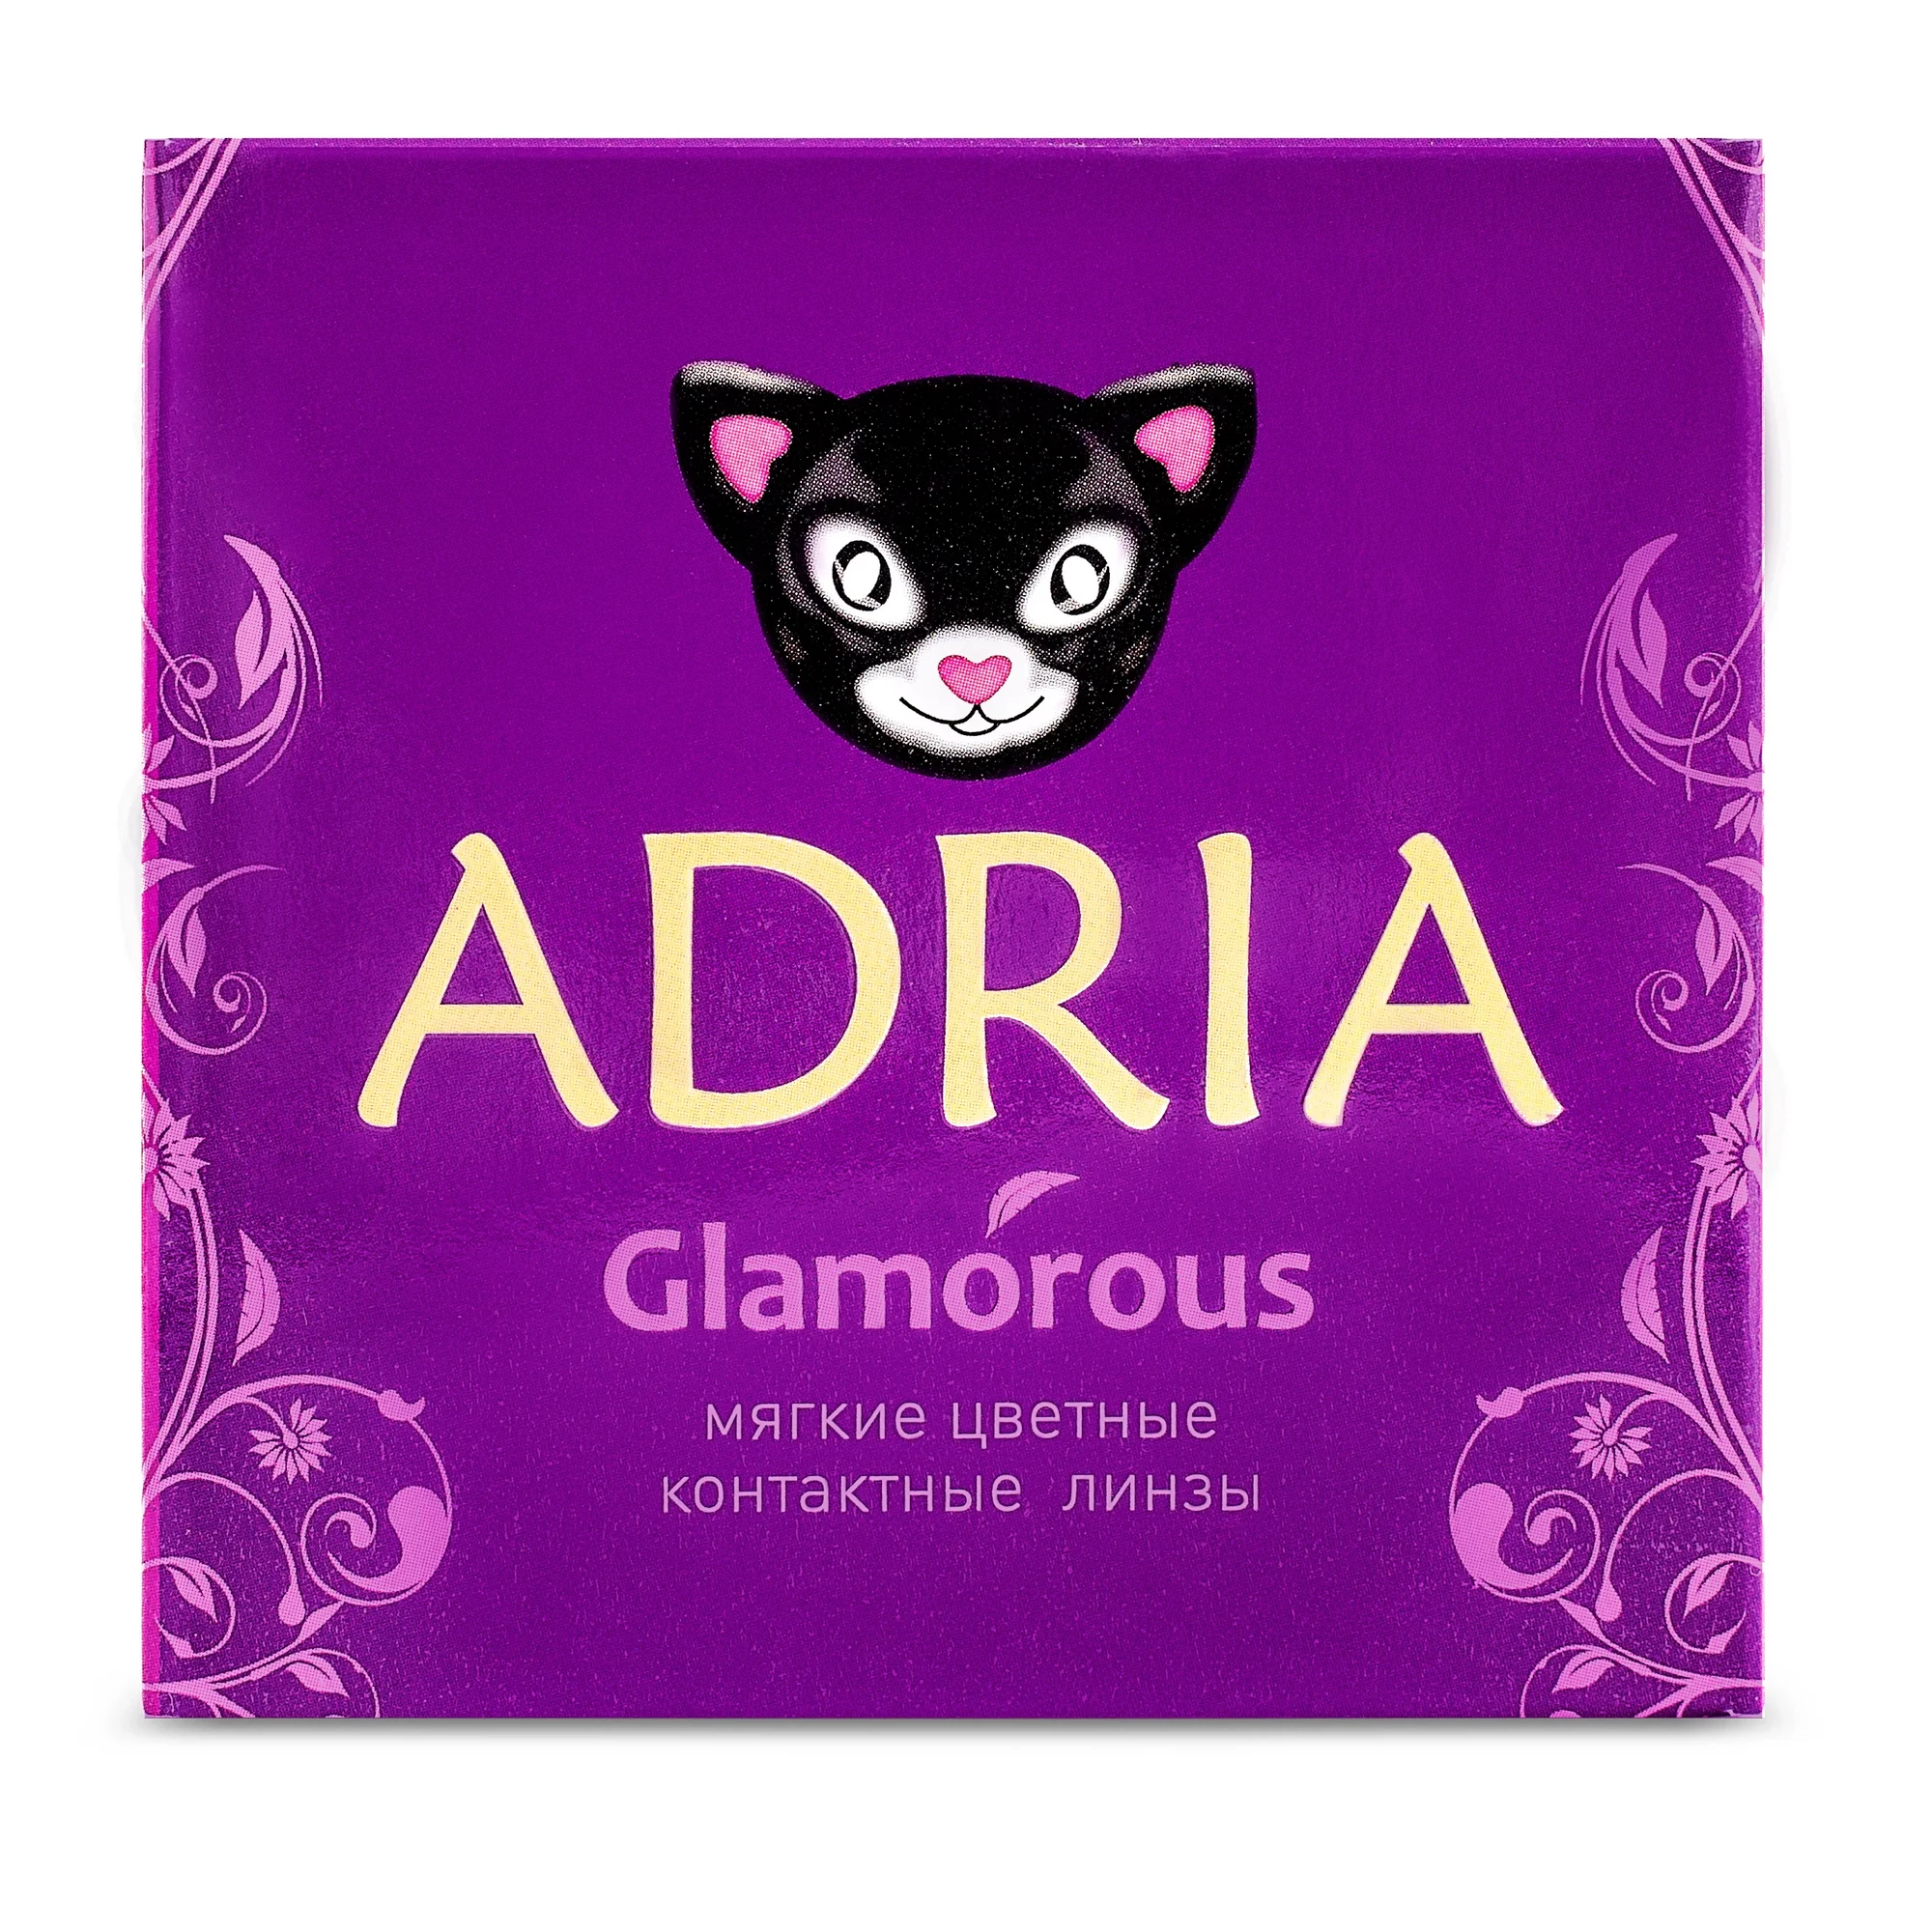 COLOR BOX ADRIA Glamorous Violet (фиолетовый)